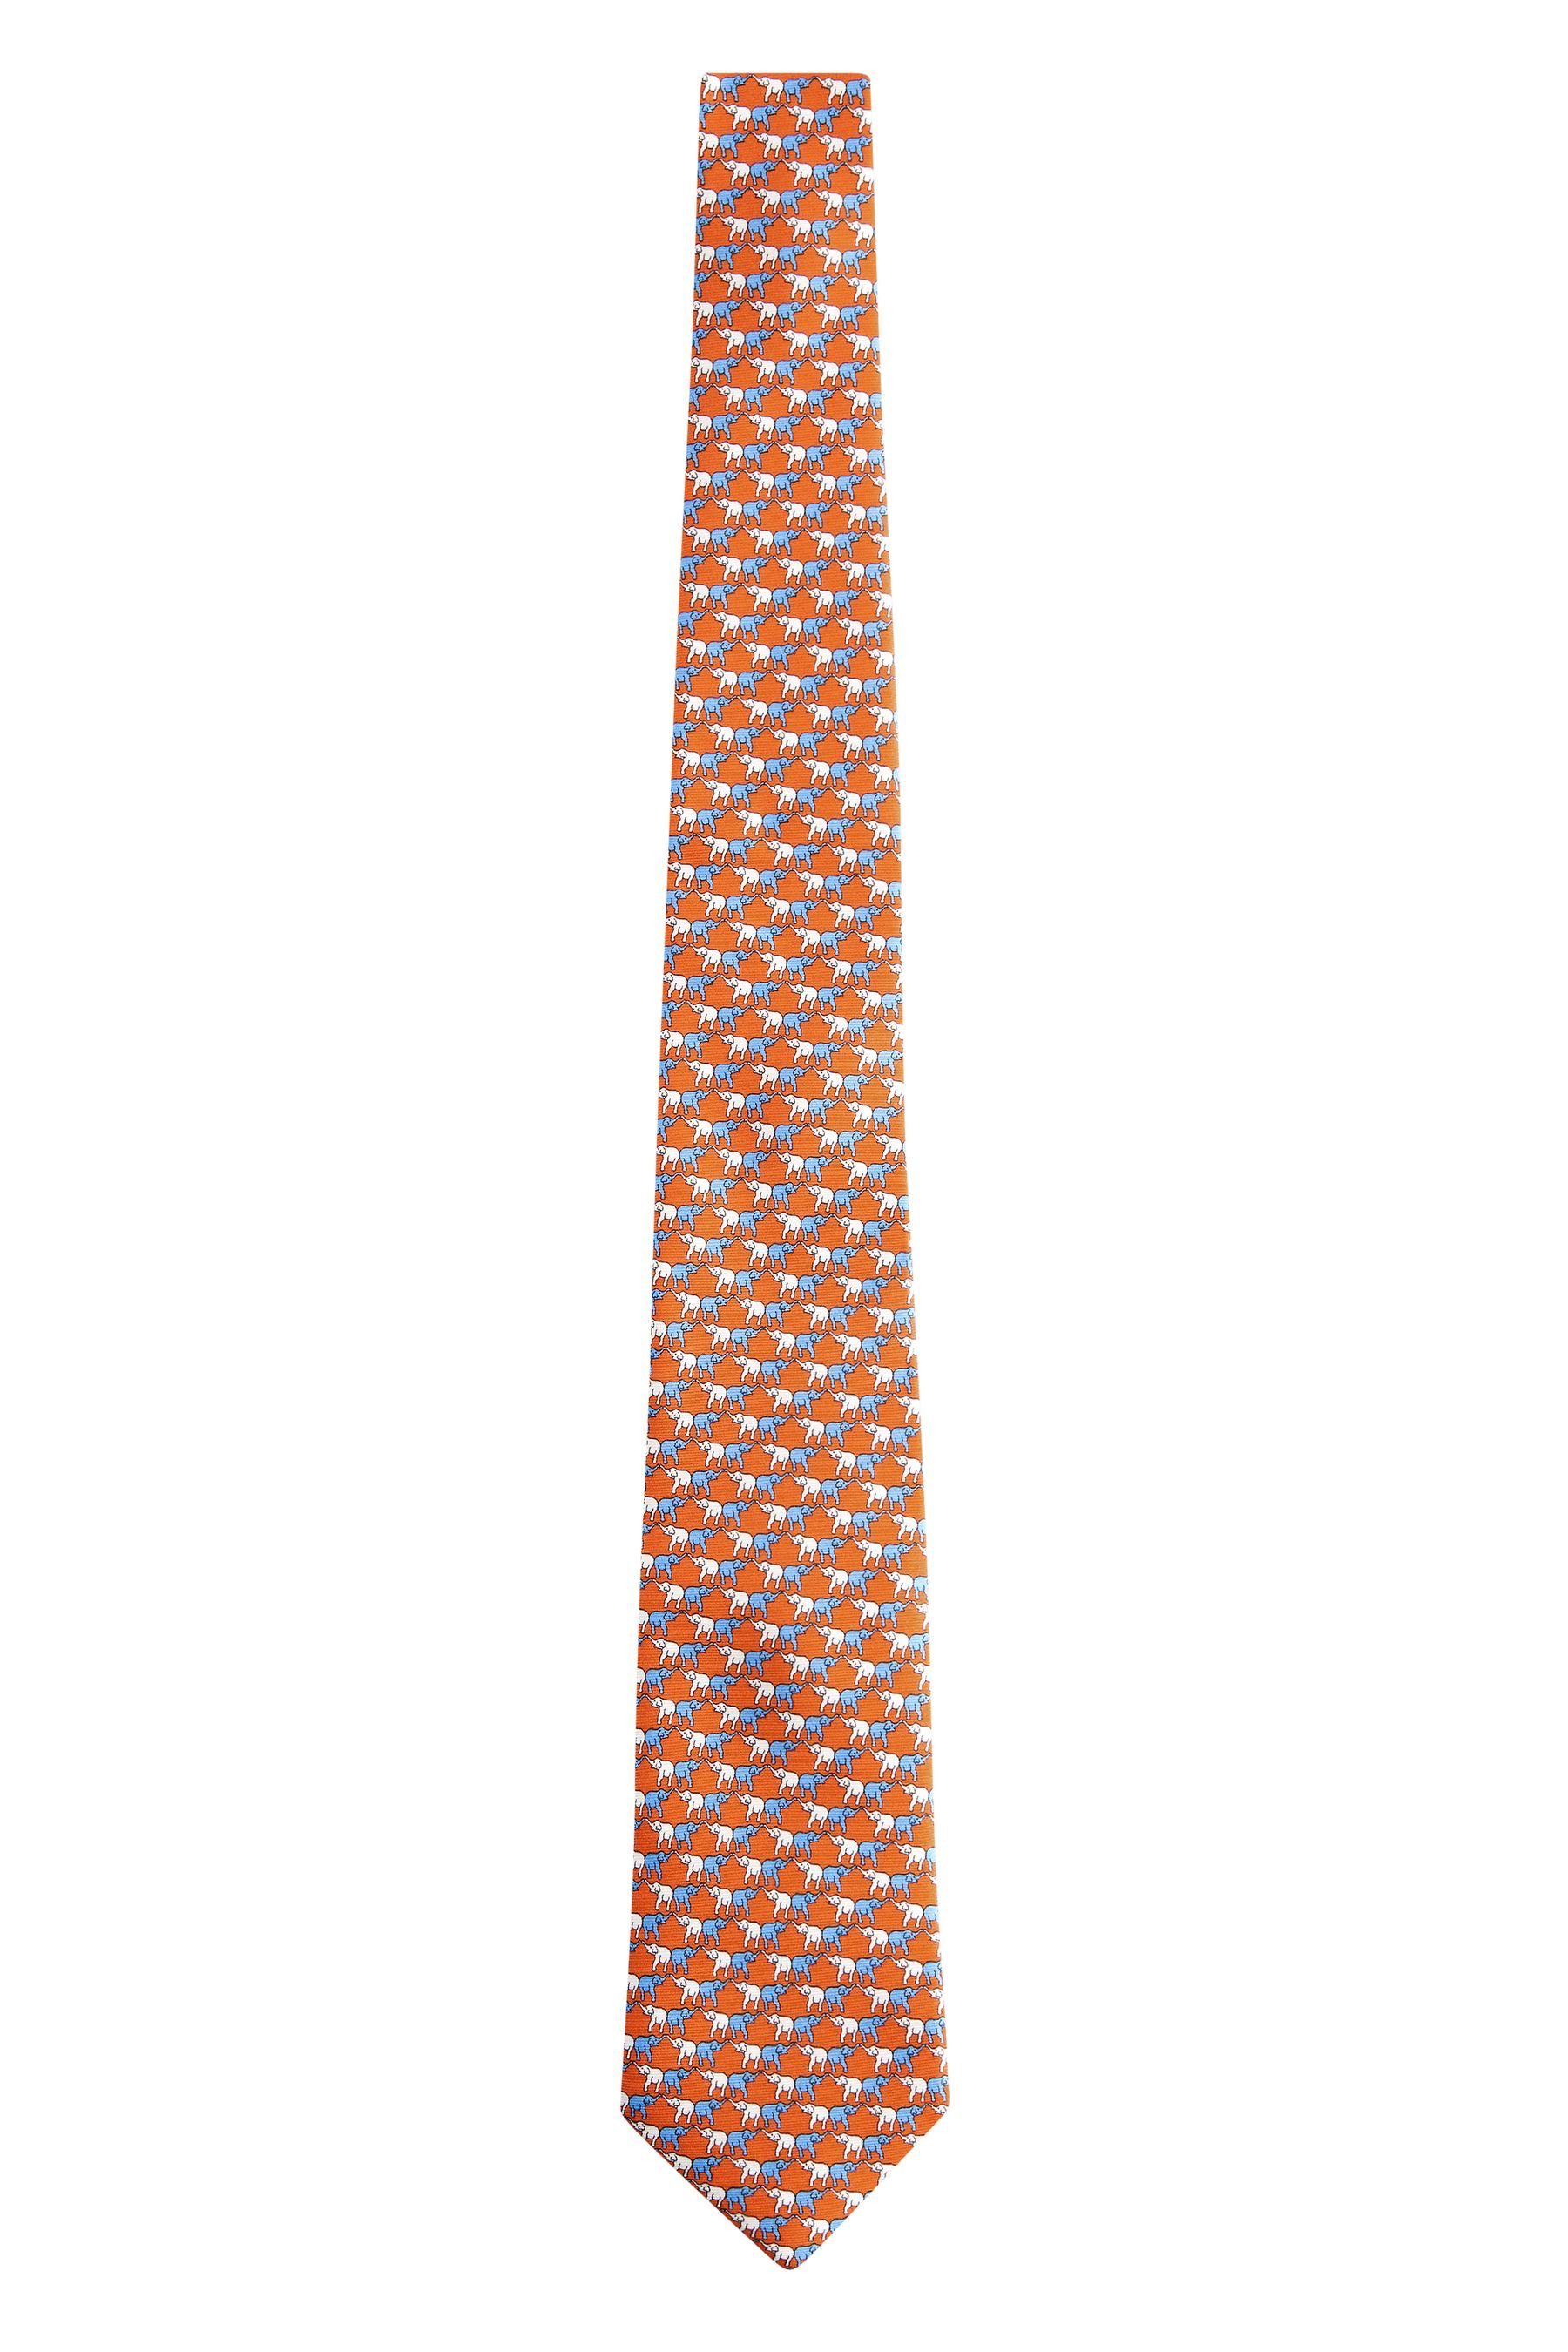 Next Krawatte Signature Auffällige Krawatte Orange in Elephant Made (1-St) Italy